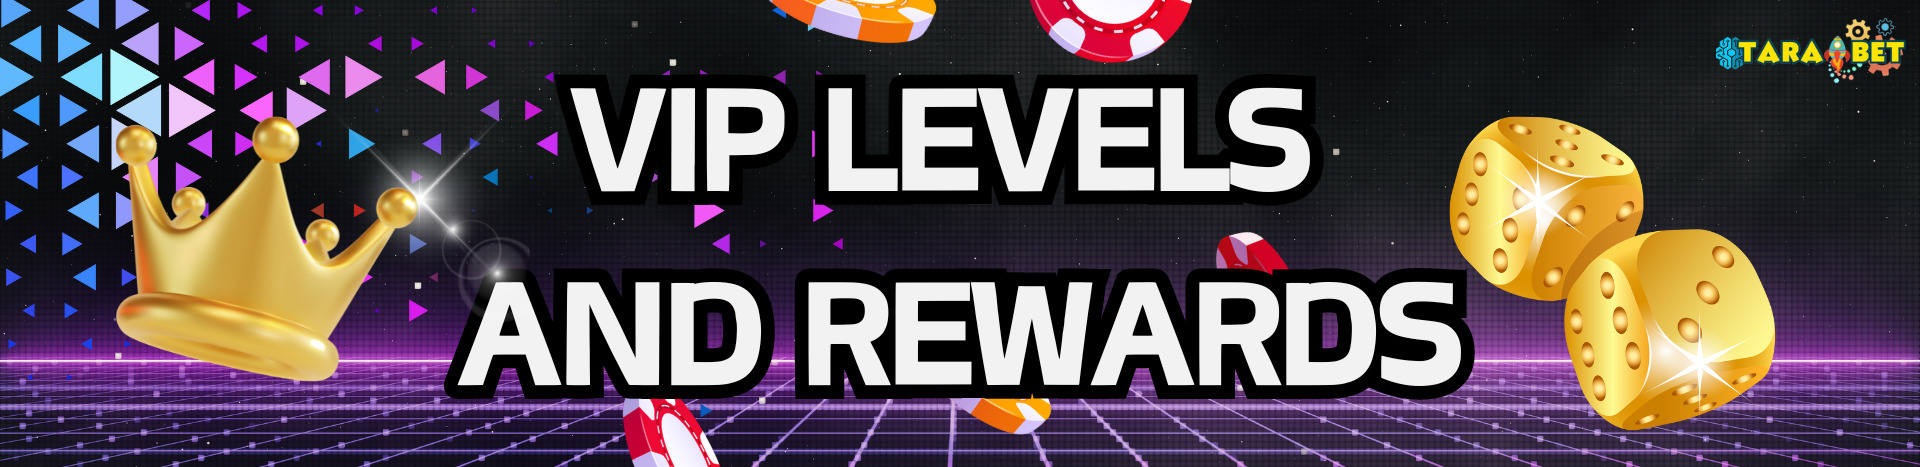 vip-and-rewards_banner